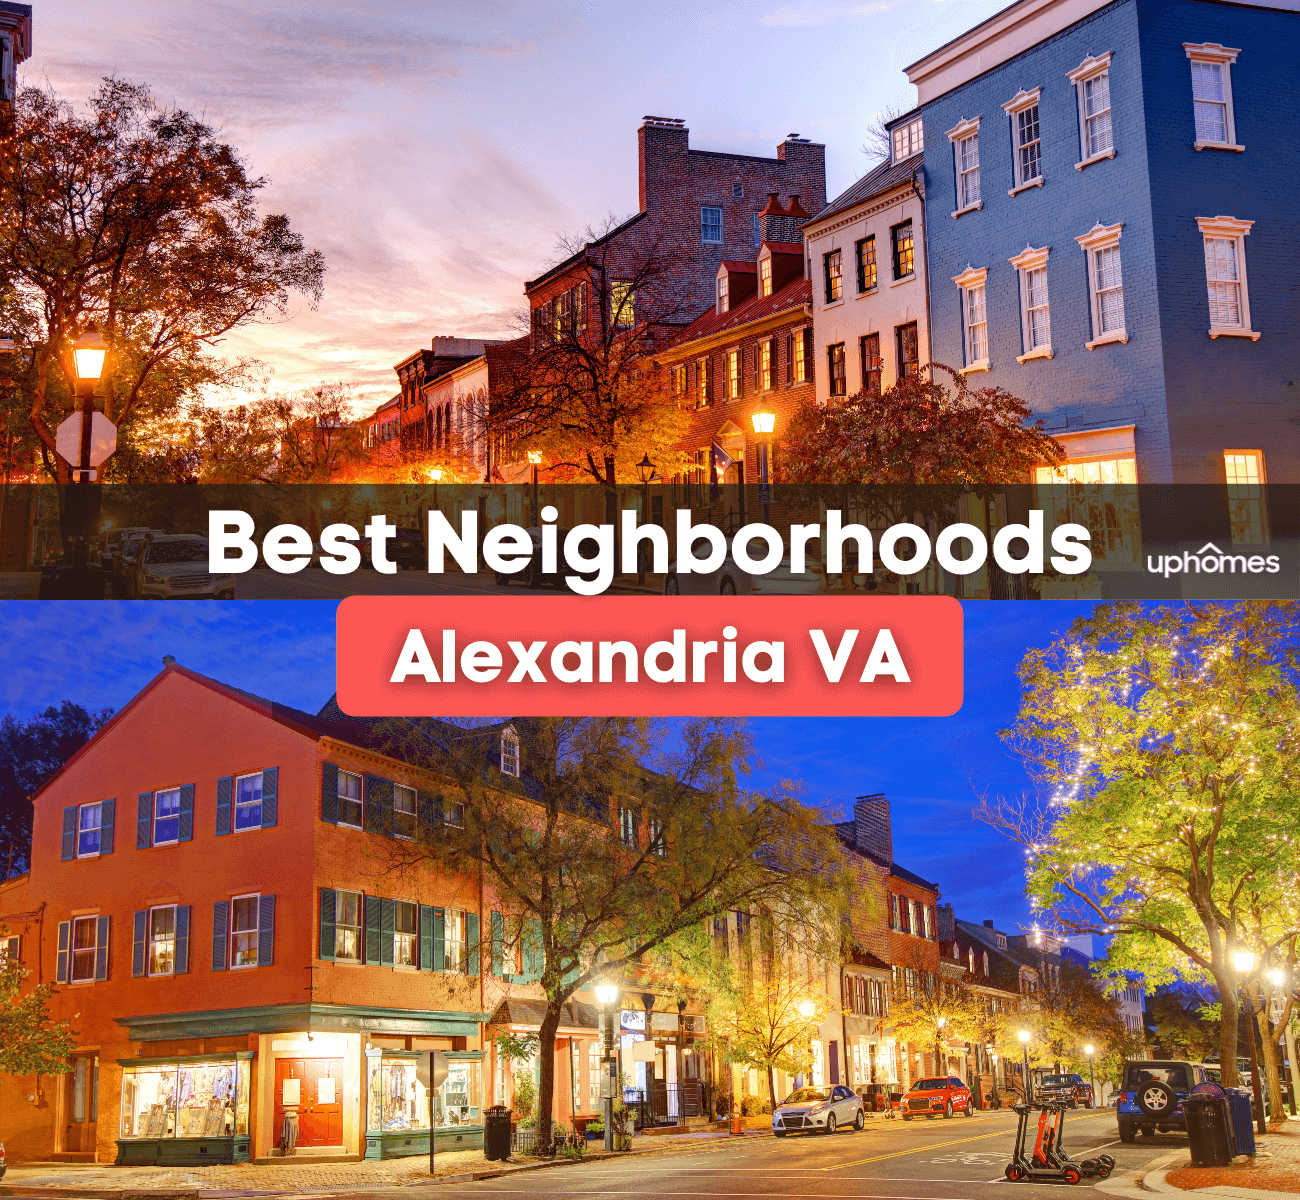 Best Neighborhoods in Alexandria, VA - Where are the best places to live in Alexandria Virginia?